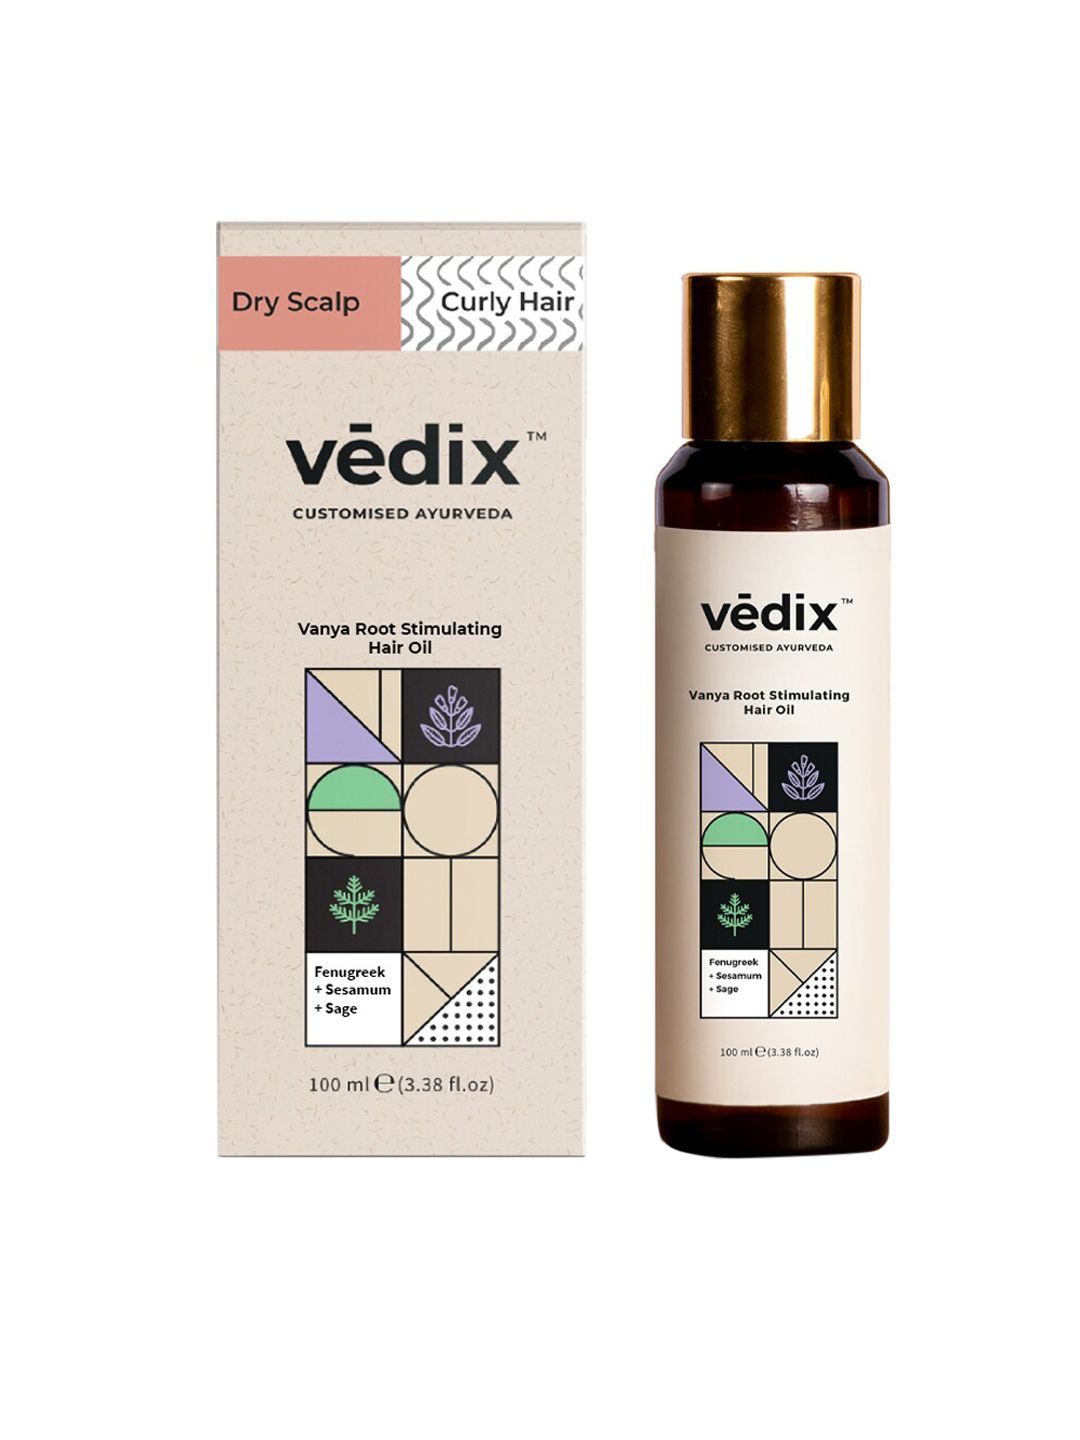 VEDIX Customized Ayurvedic Vanya Root Stimulating Hair Oil for Dry Scalp - Curly Hair Price in India